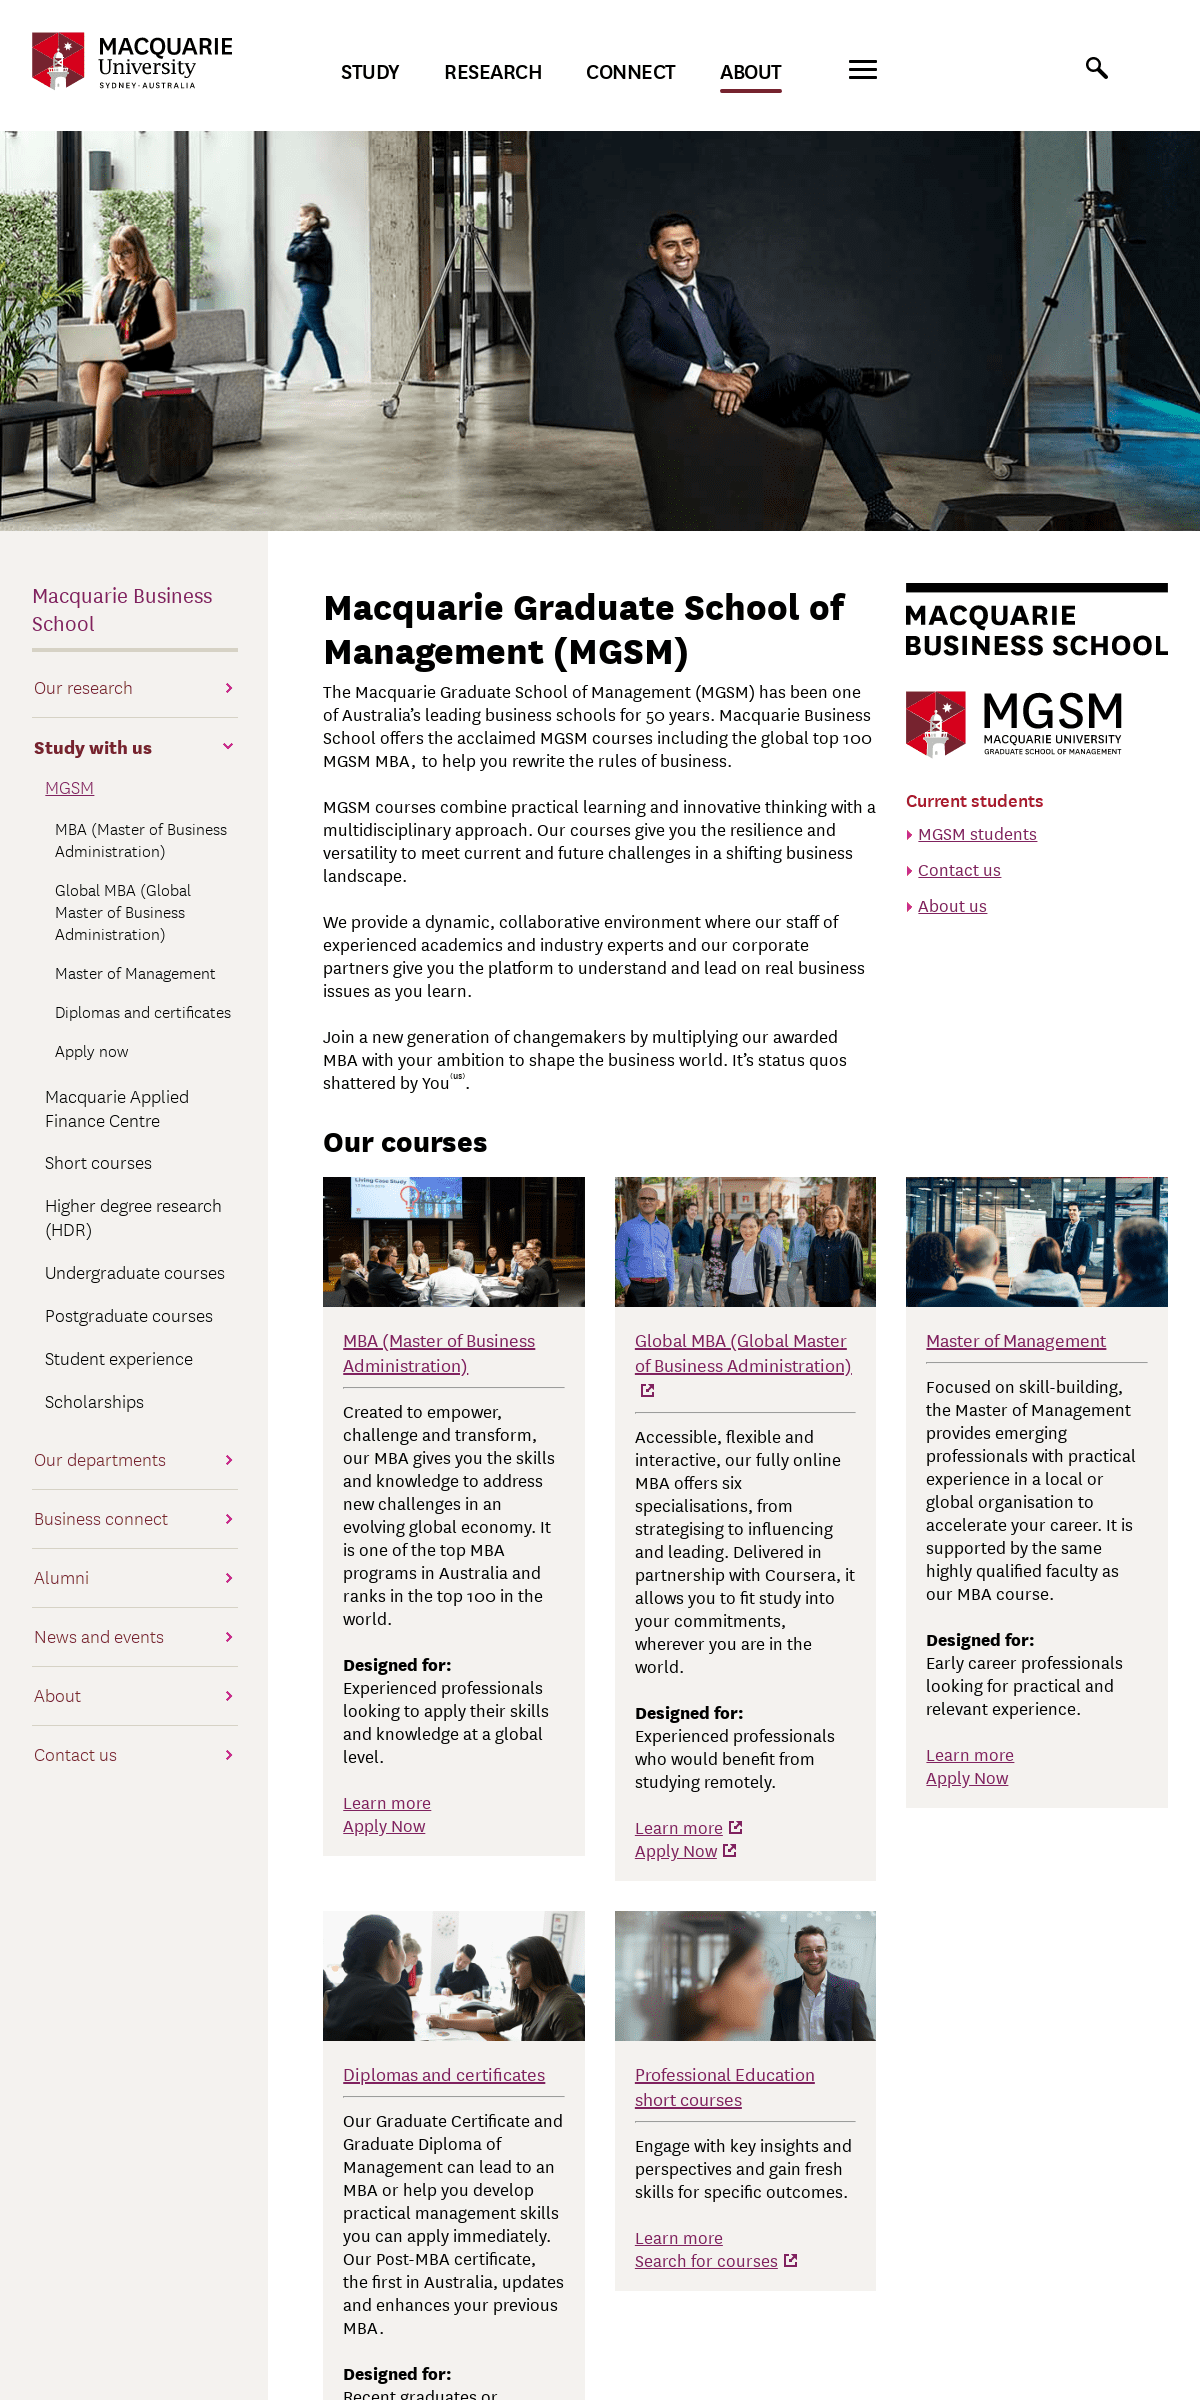 A complete backup of mgsm.edu.au